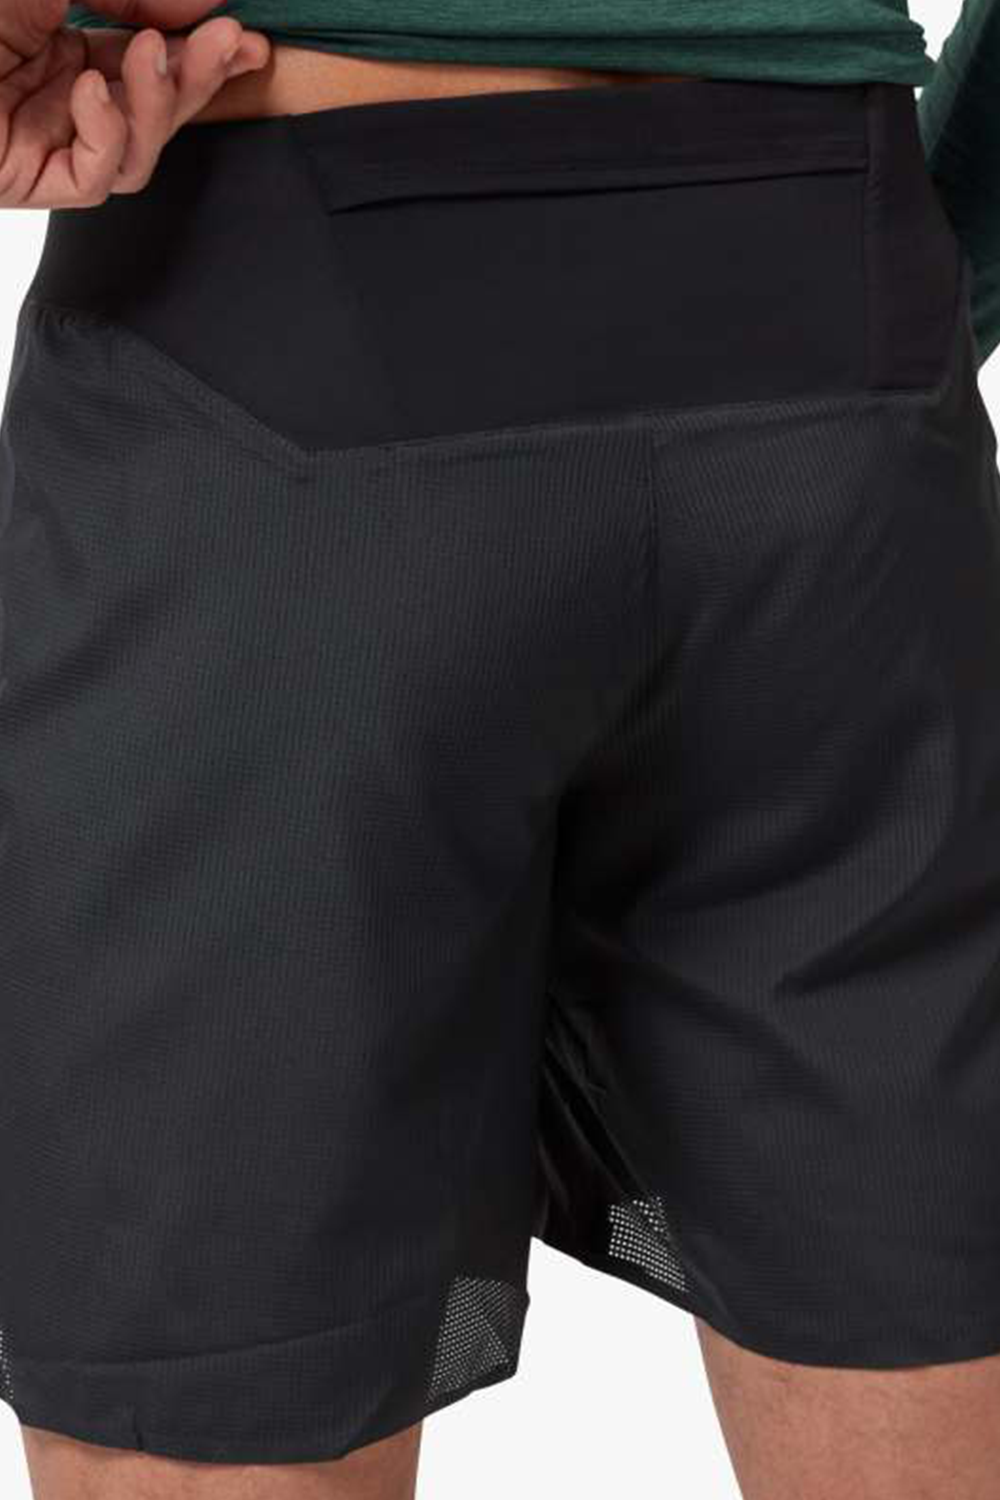 ON | Men's Lightweight Shorts in Black